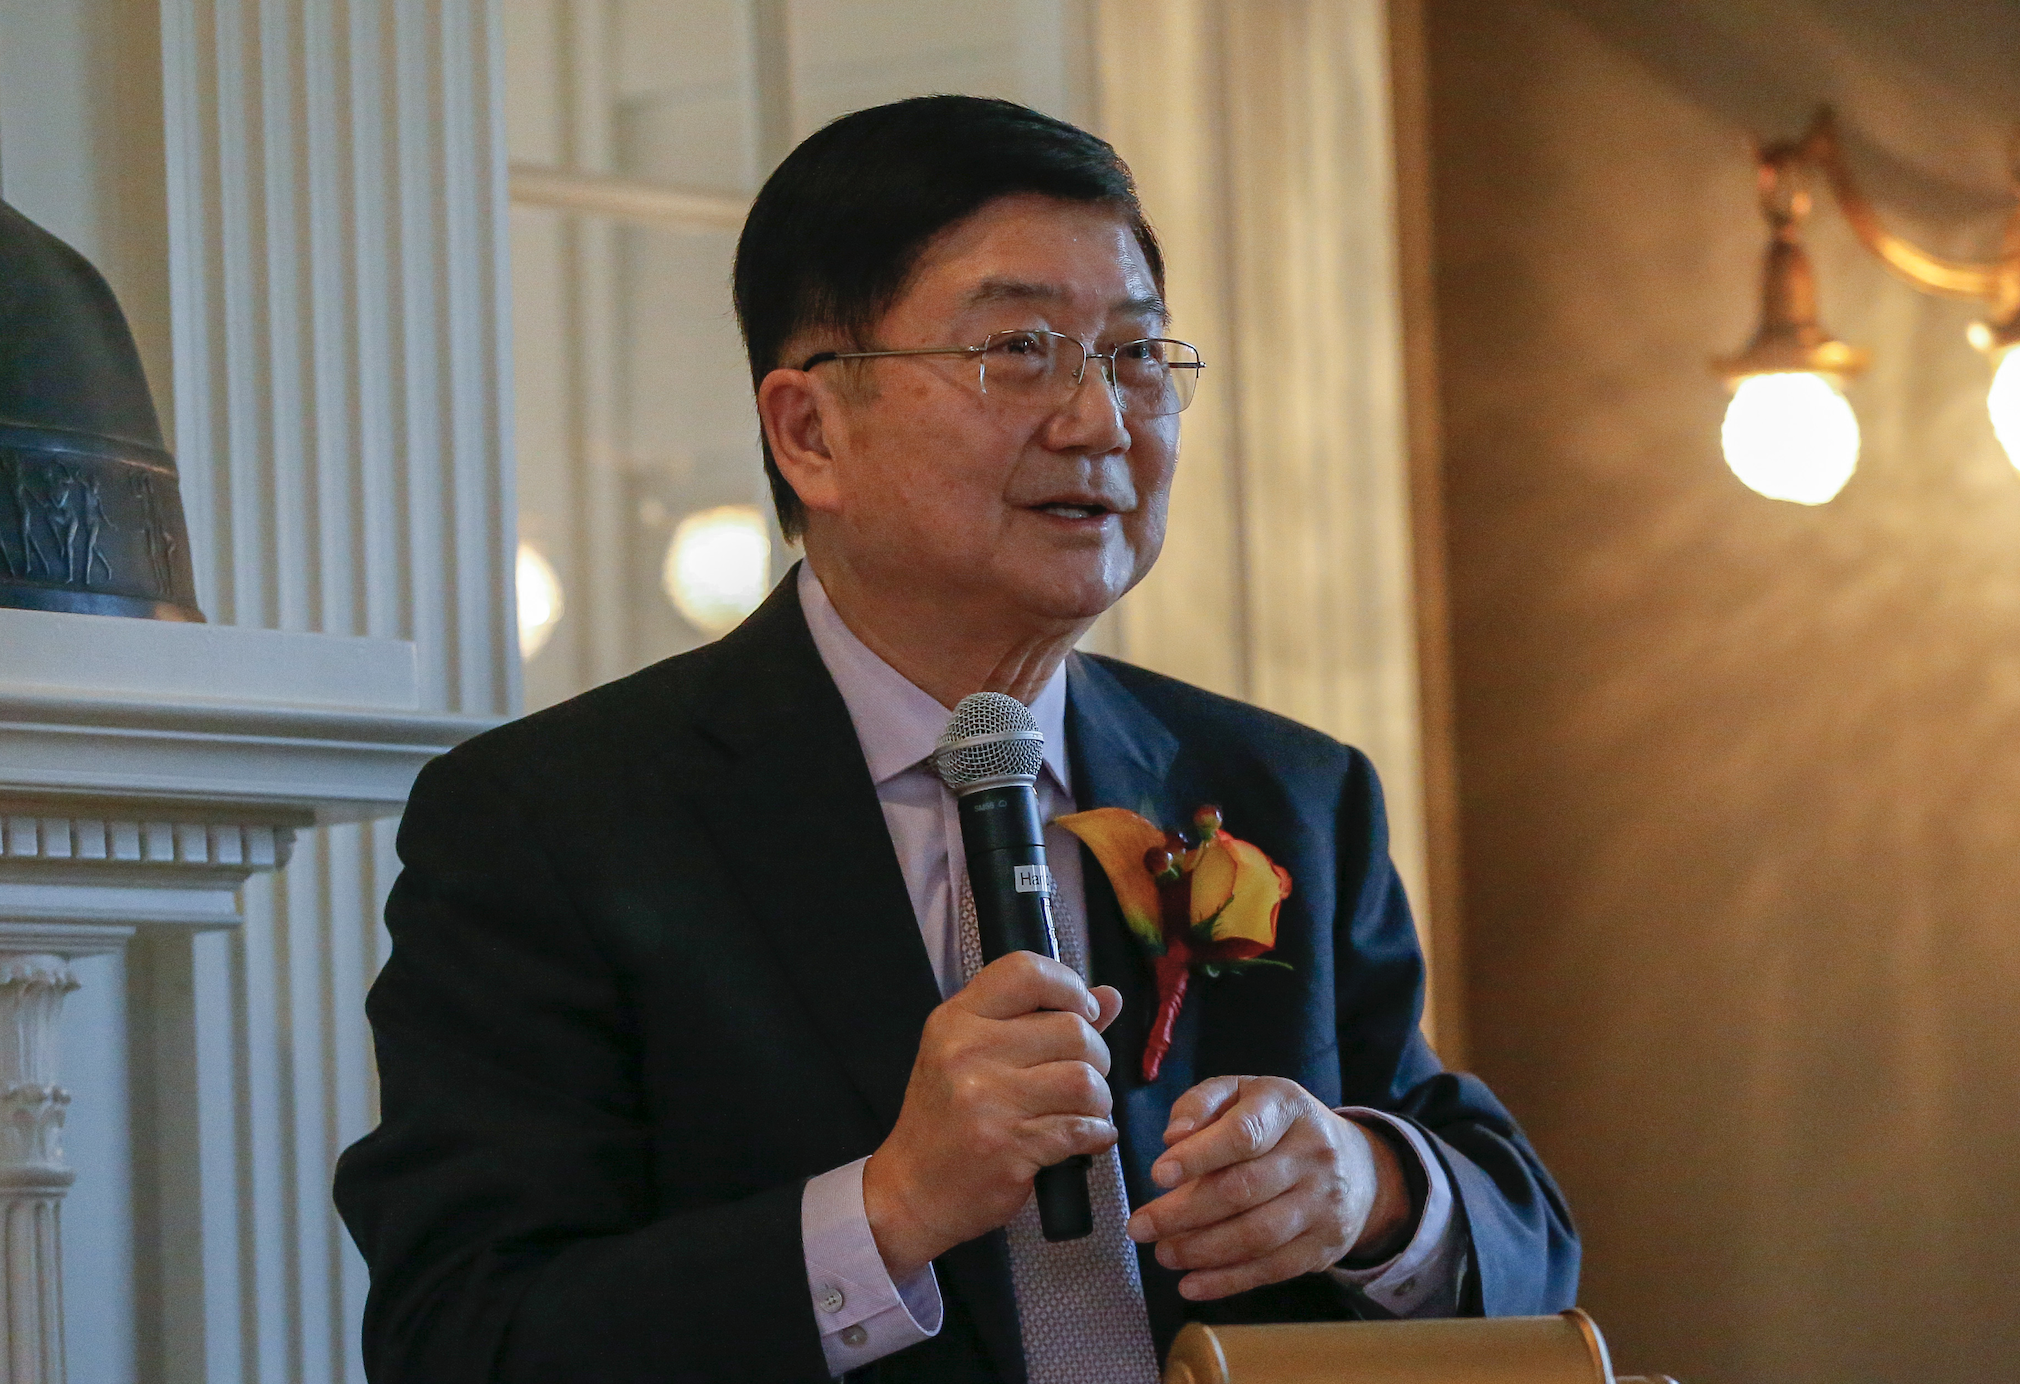 2019 Regents Professor David Y.H. Pui